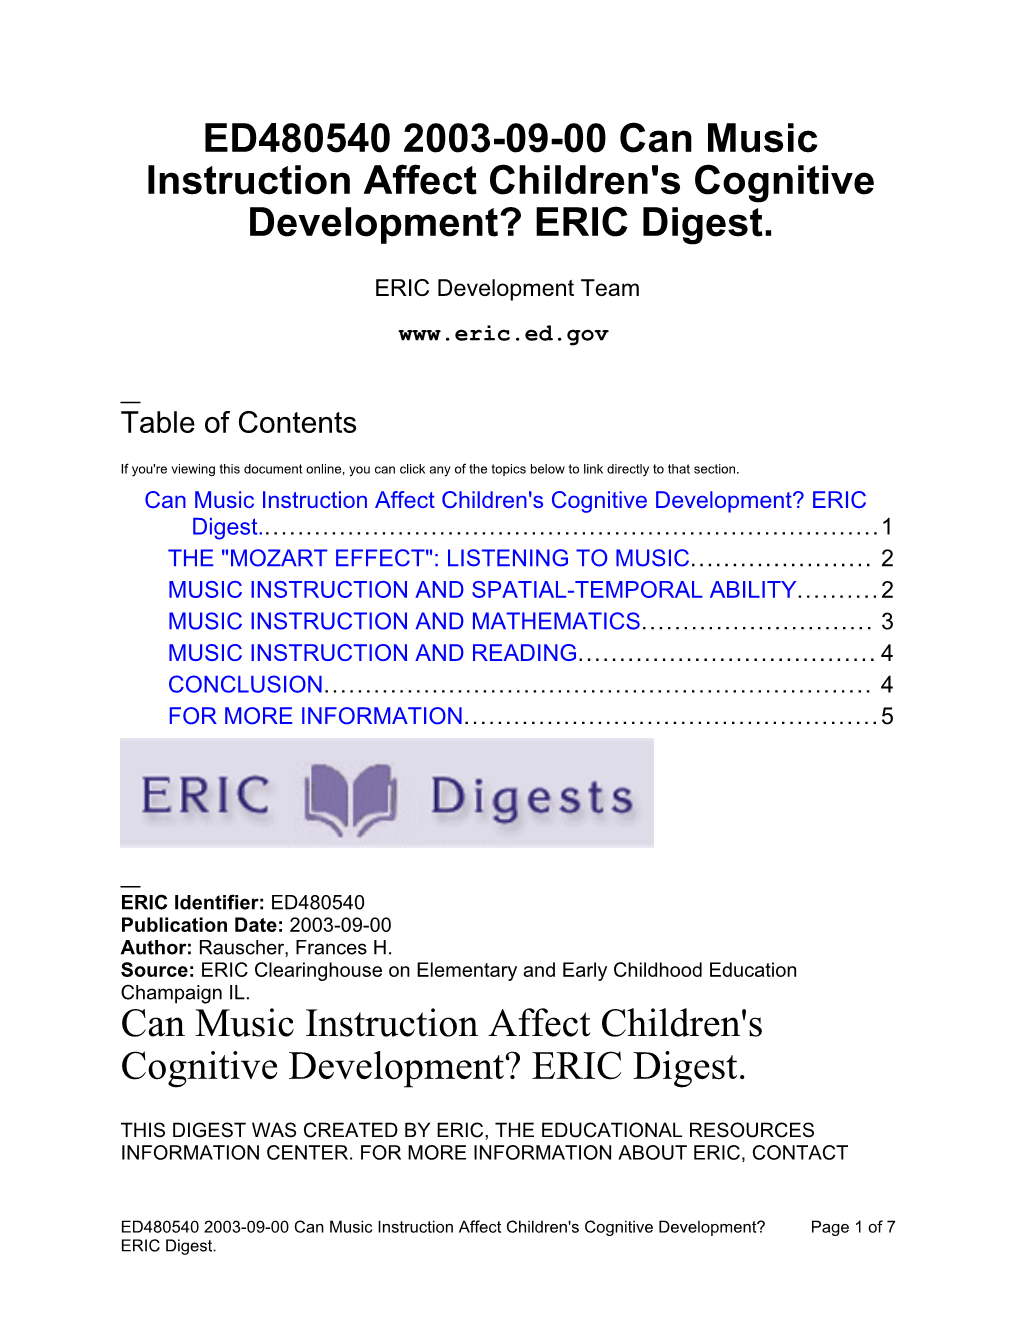 Can Music Instruction Affect Children's Cognitive Development? ERIC Digest